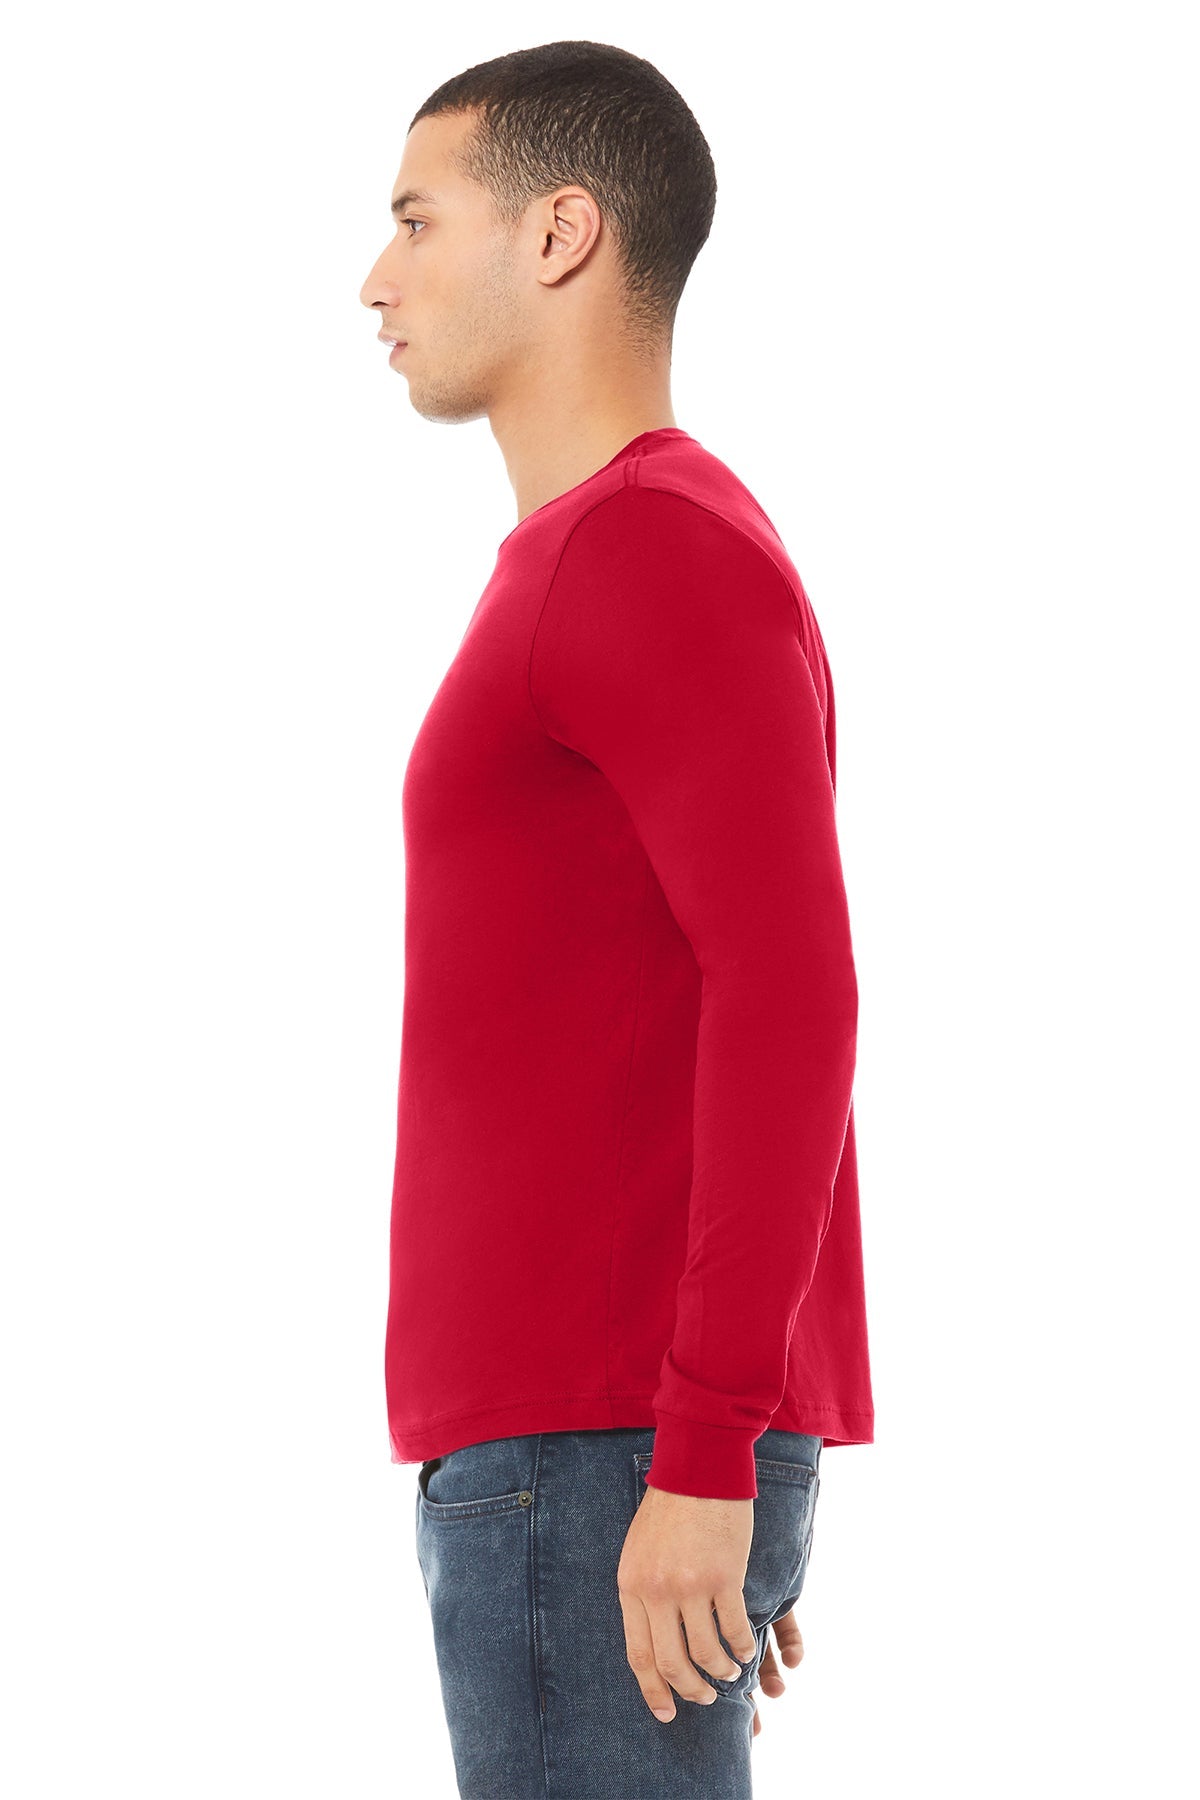 bella + canvas unisex jersey long sleeve t-shirt 3501 red